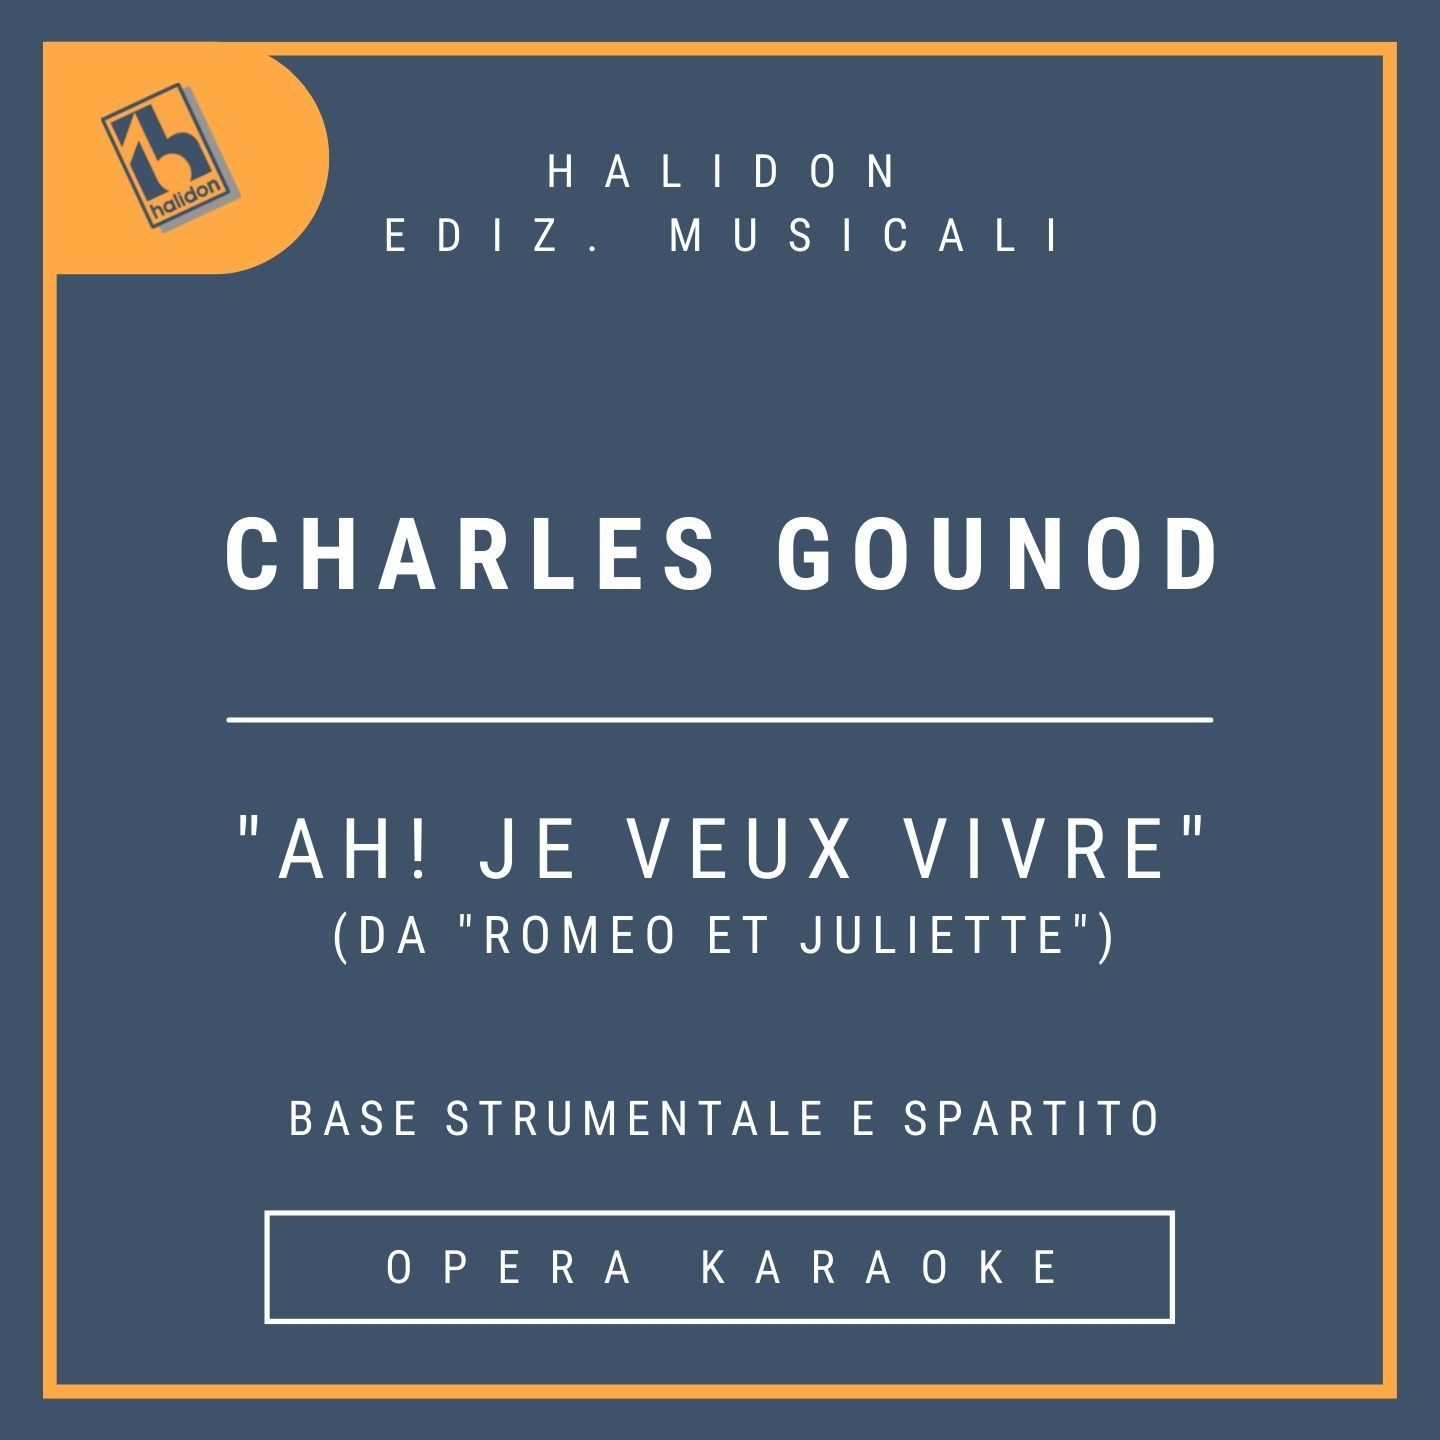 Charles Gounod - Ah! Je veux vivre (from 'Romeo e Juliette') - Juliette Arietta (coloratura soprano-mezzo) - Instrumental track + sheet